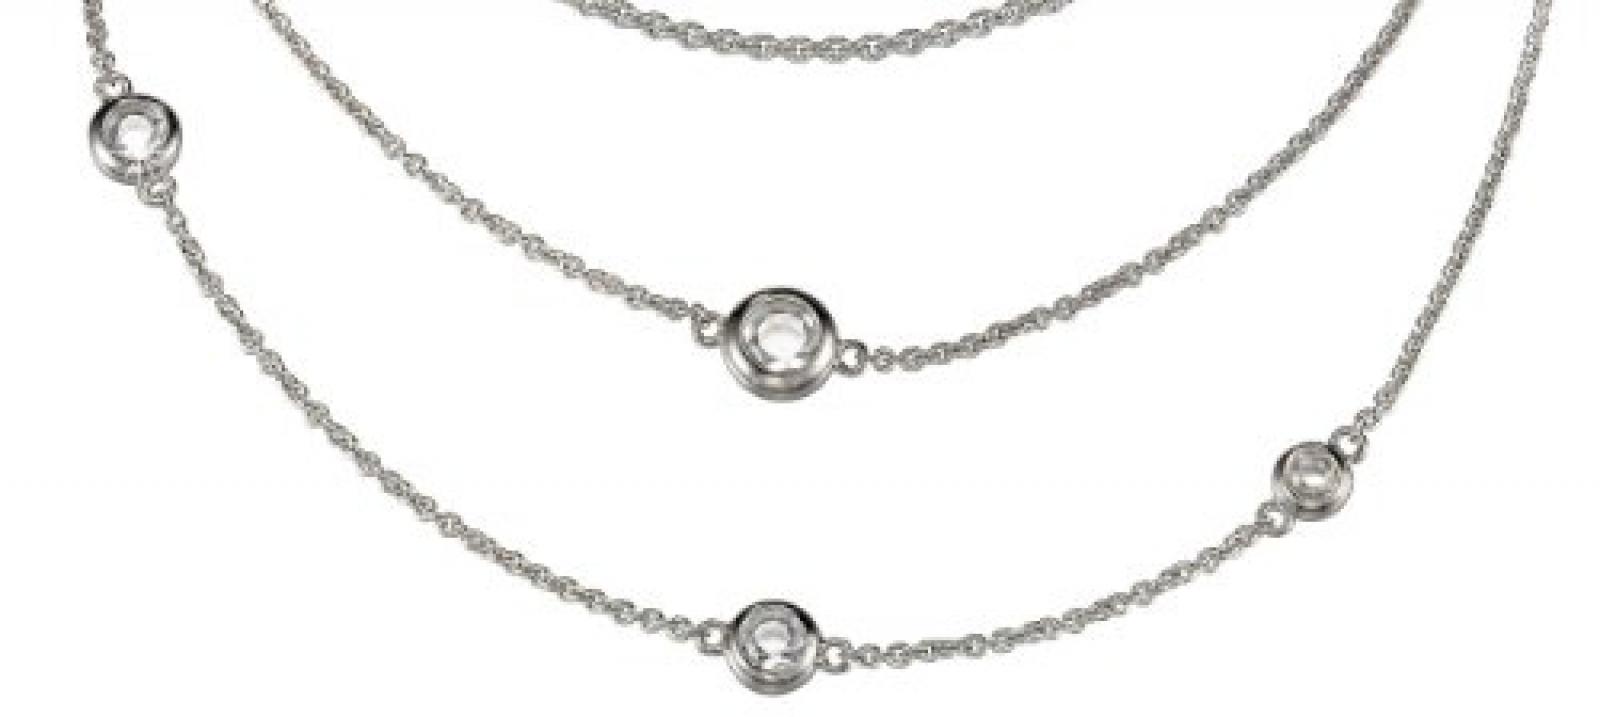 Pierre Cardin Damen Halskette 925 Sterling Silber rhodiniert Kristall Zirkonia Poussières détoiles 42 cm weiß PCNL90408A420 